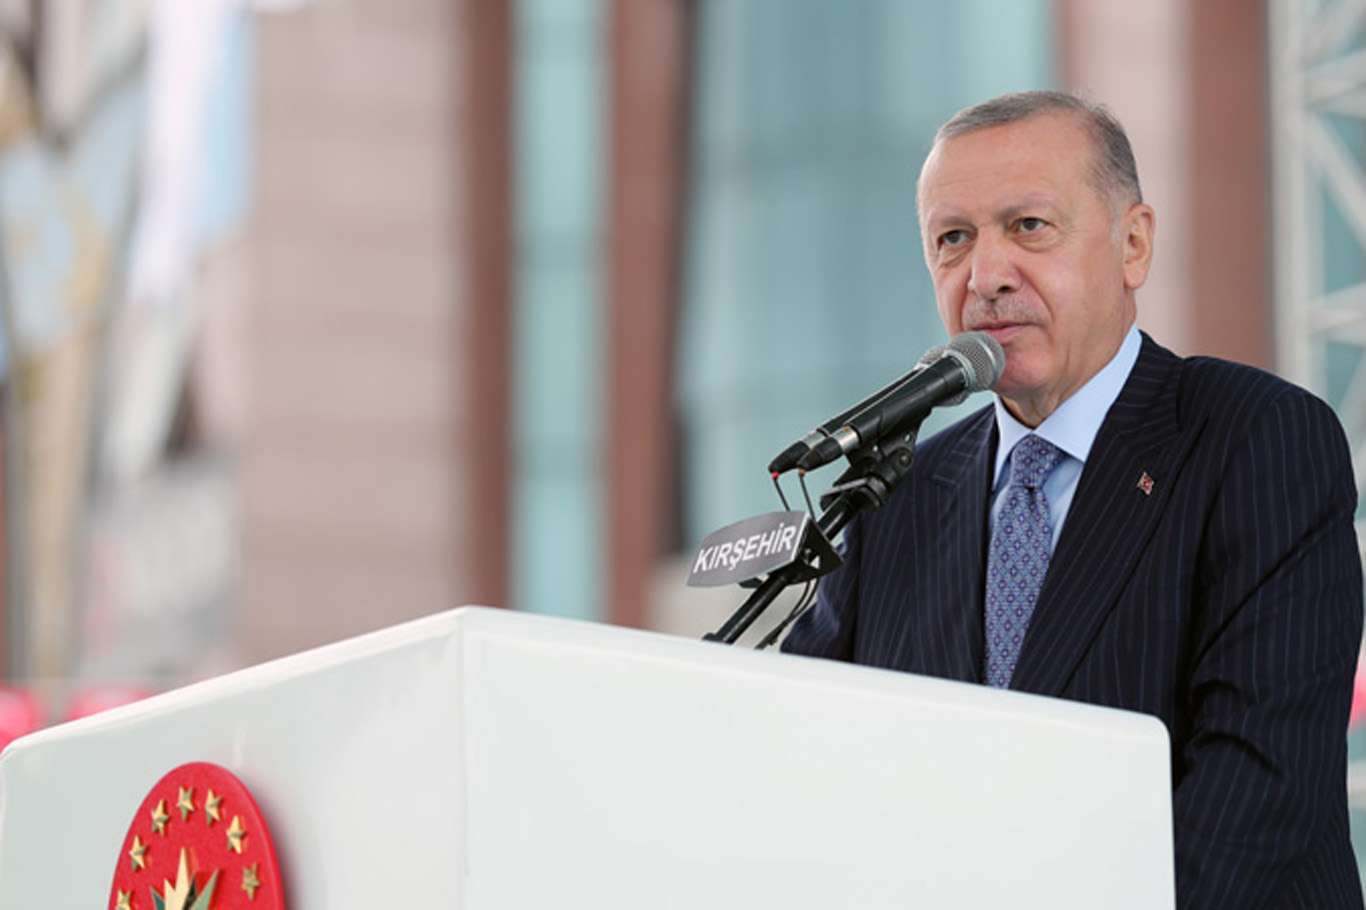 Turkey achieves the highest growth rates in the world, Erdoğan says